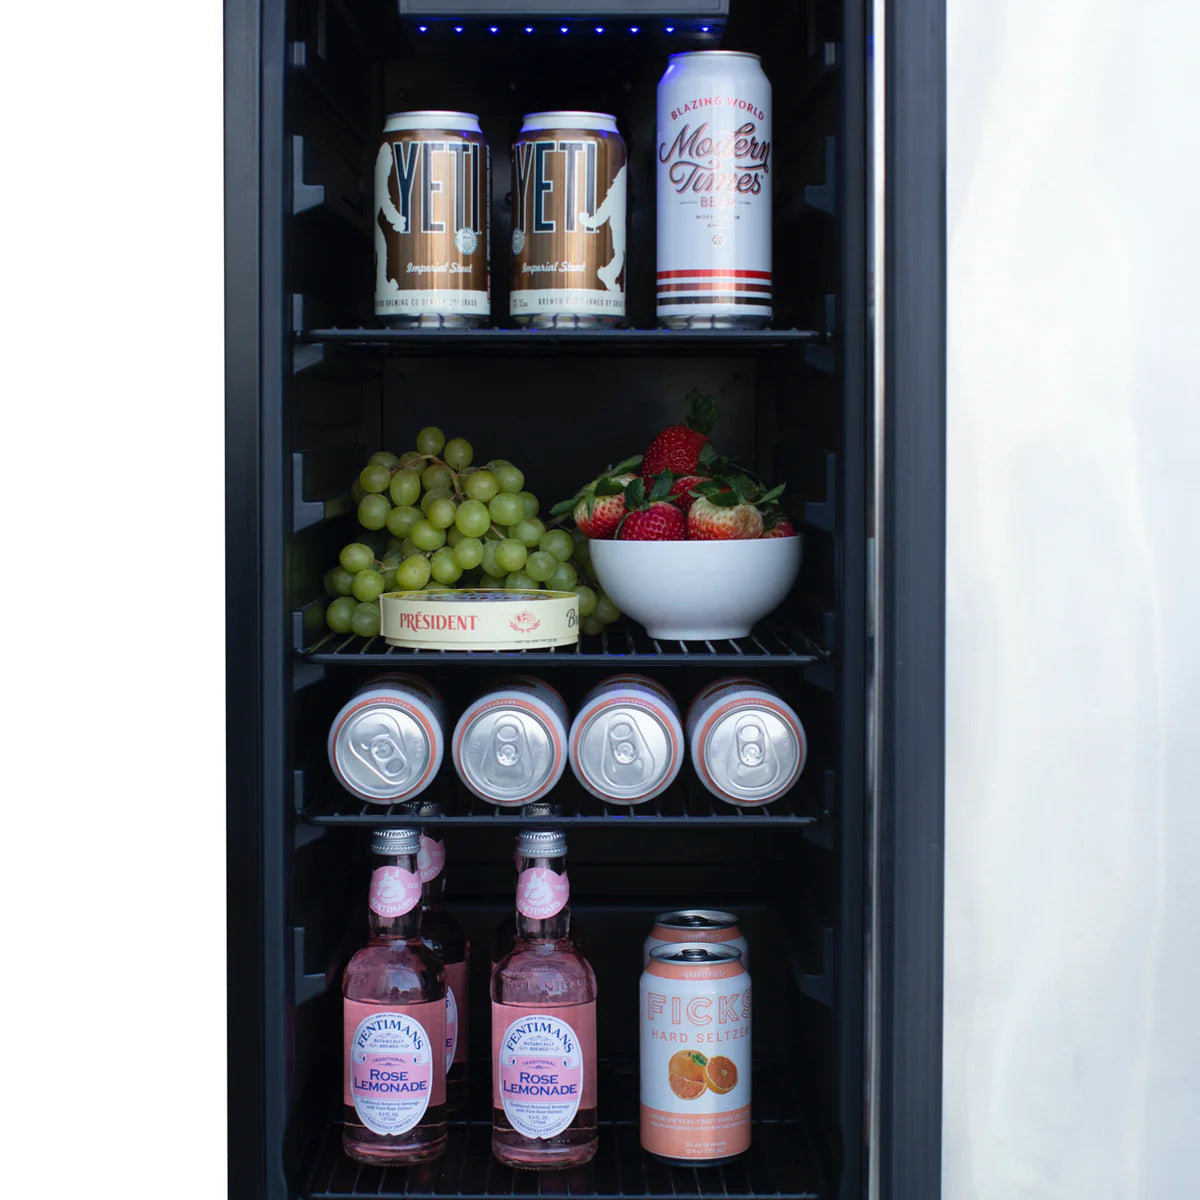 15" 3.2C Outdoor Rated Refrigerator with Stainless Steel Door